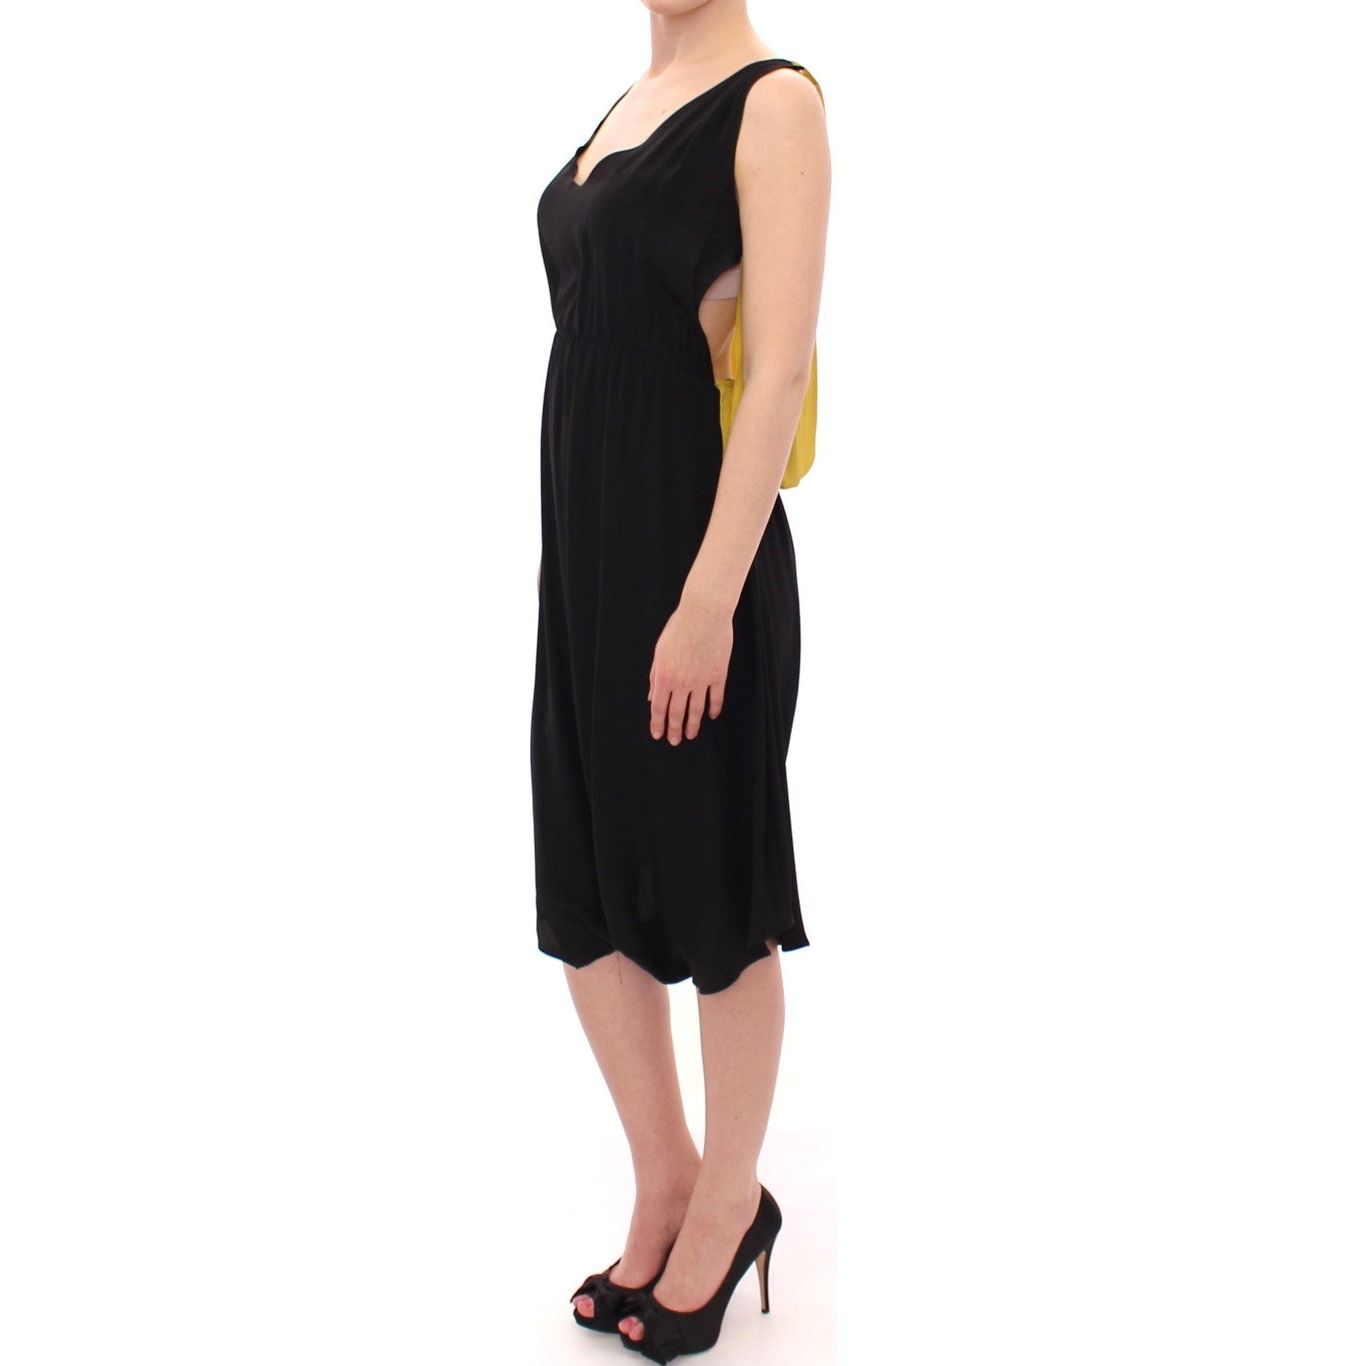 Lamberto Petri Elegant Silk Blend Shift Dress in Black and Yellow black-yellow-silk-shift-sheath-coctail-dress 218495-black-yellow-silk-shift-sheath-coctail-dress-1_2a1c6cf9-82cb-43e0-b1bf-059276aa85e9.jpg